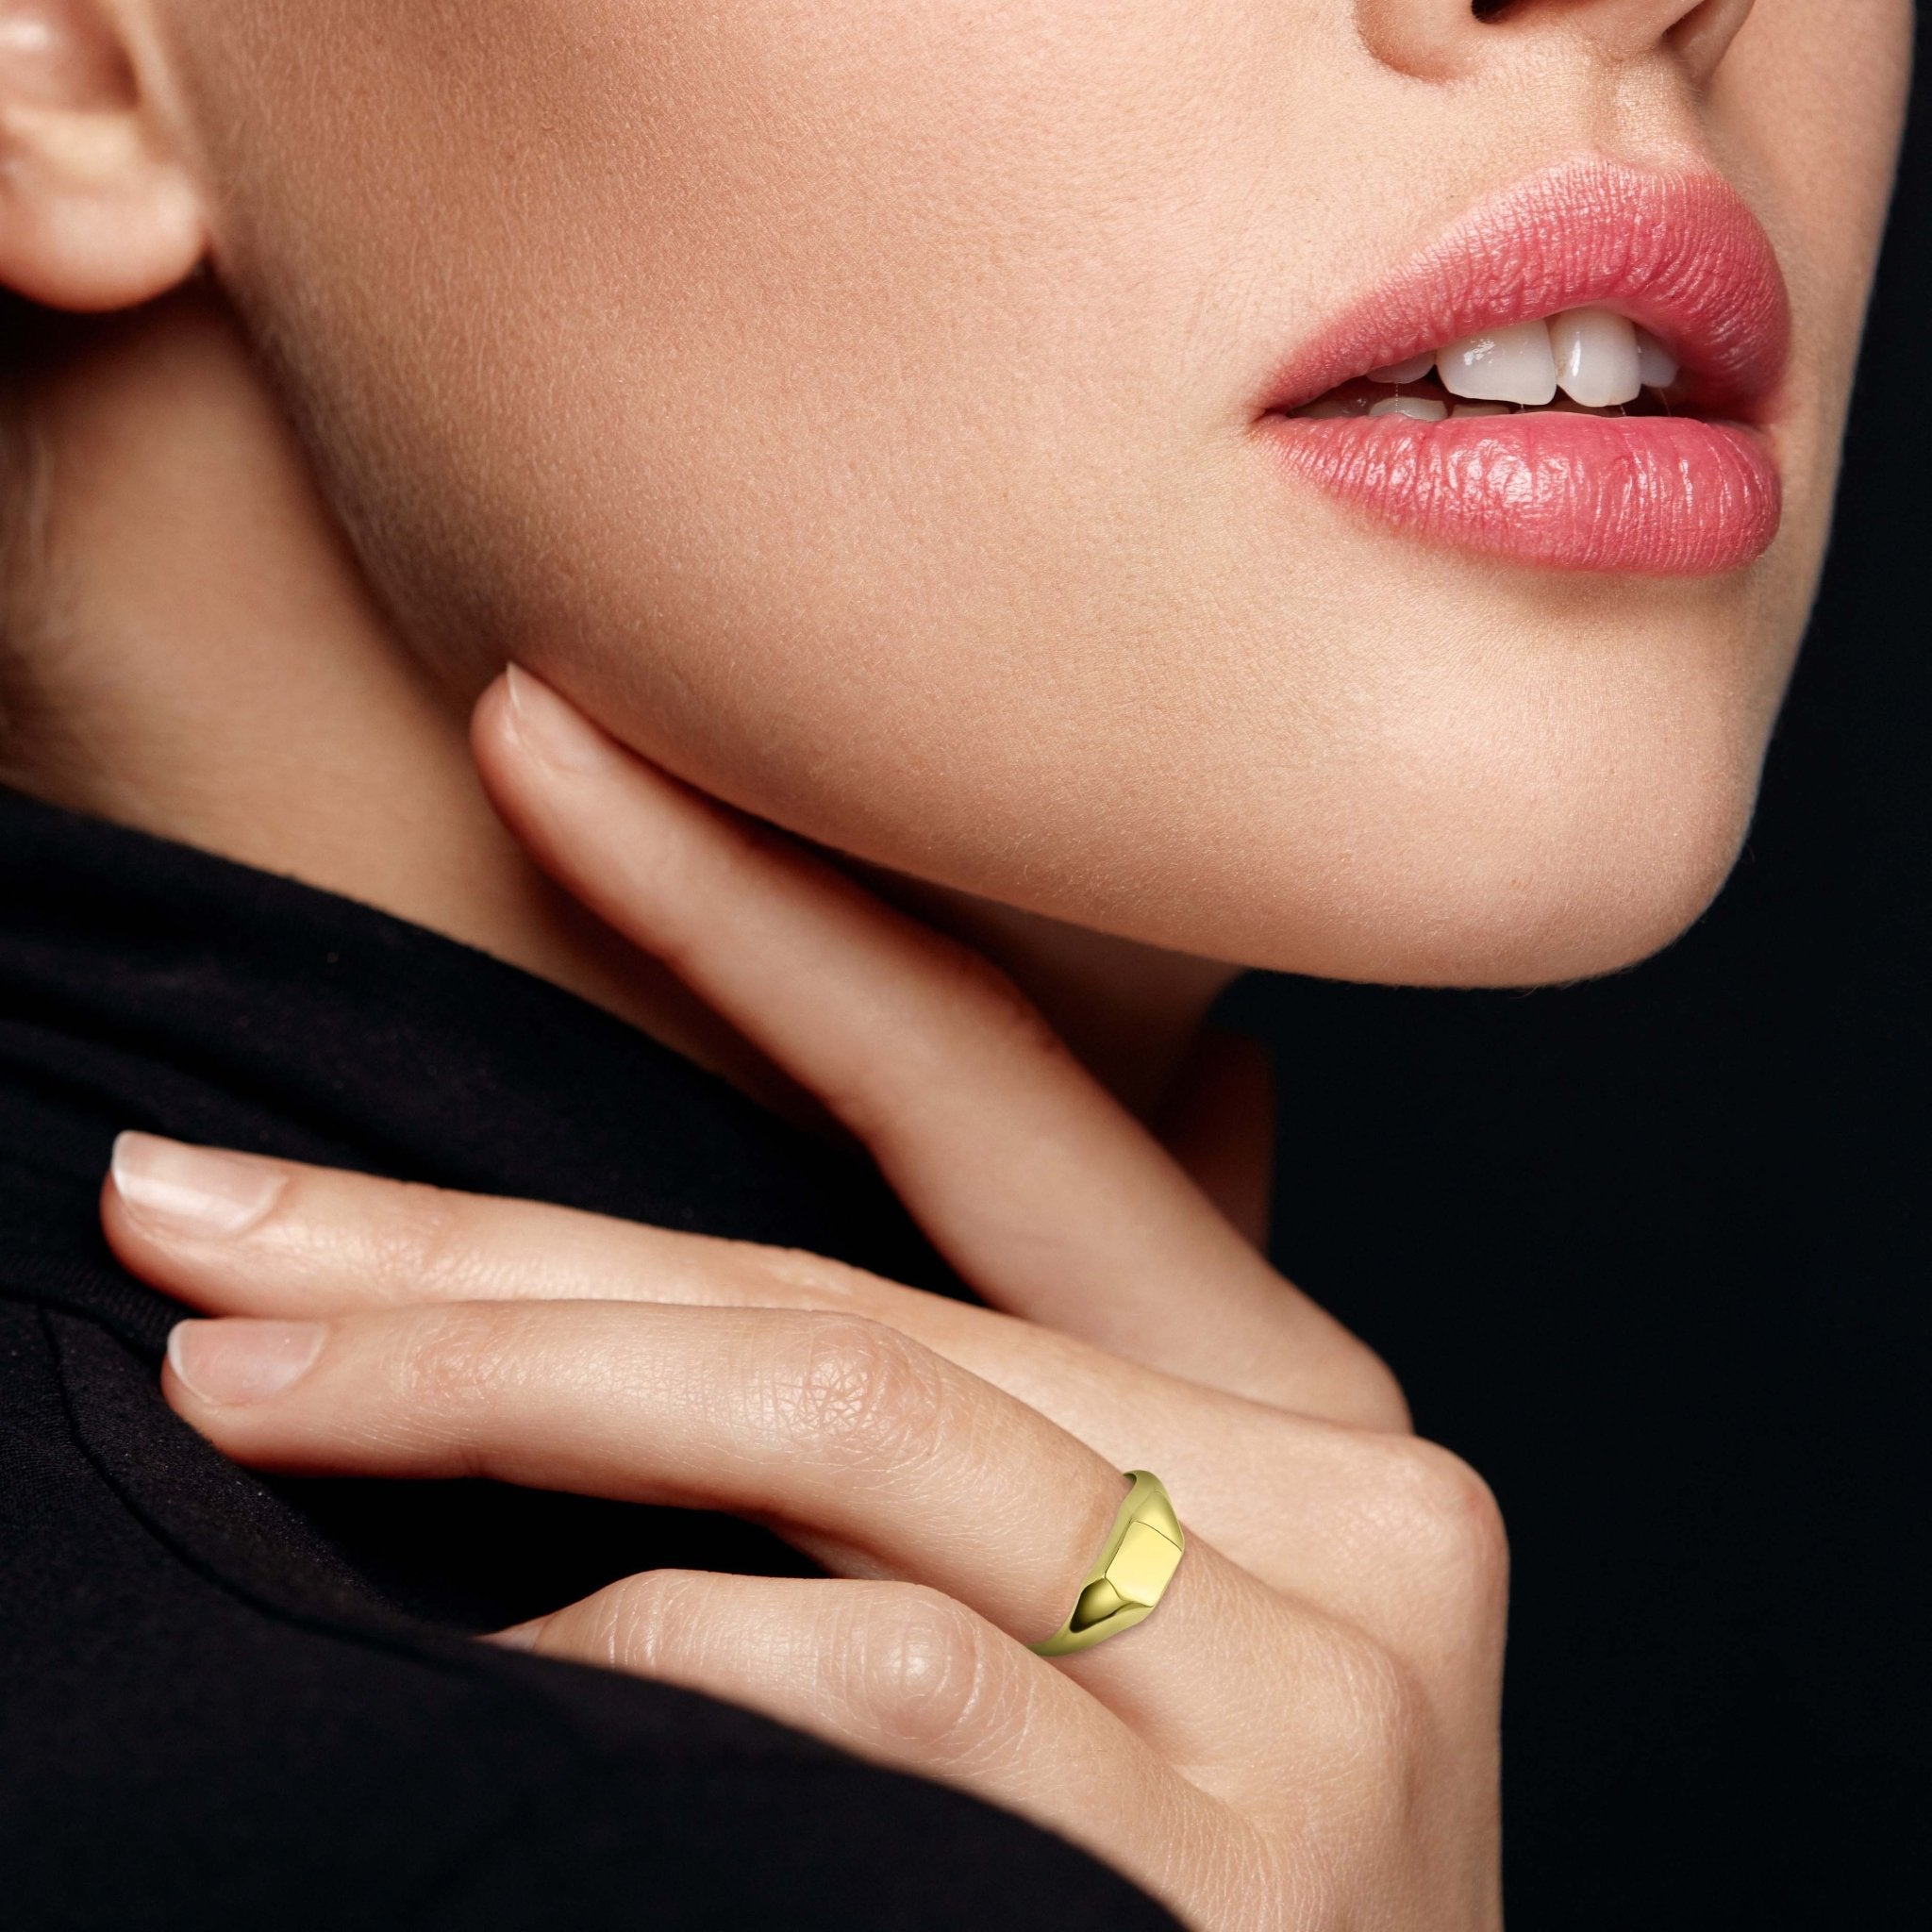 1 Gram Gold Forming Superior Quality Hand-crafted Design Ring For Men -  Style A973 at Rs 1250.00 | Gold Forming Jewelry, सोने का पानी चढ़े हुए  गहने, गोल्ड फॉर्मिंग ज्वेलरी - Soni